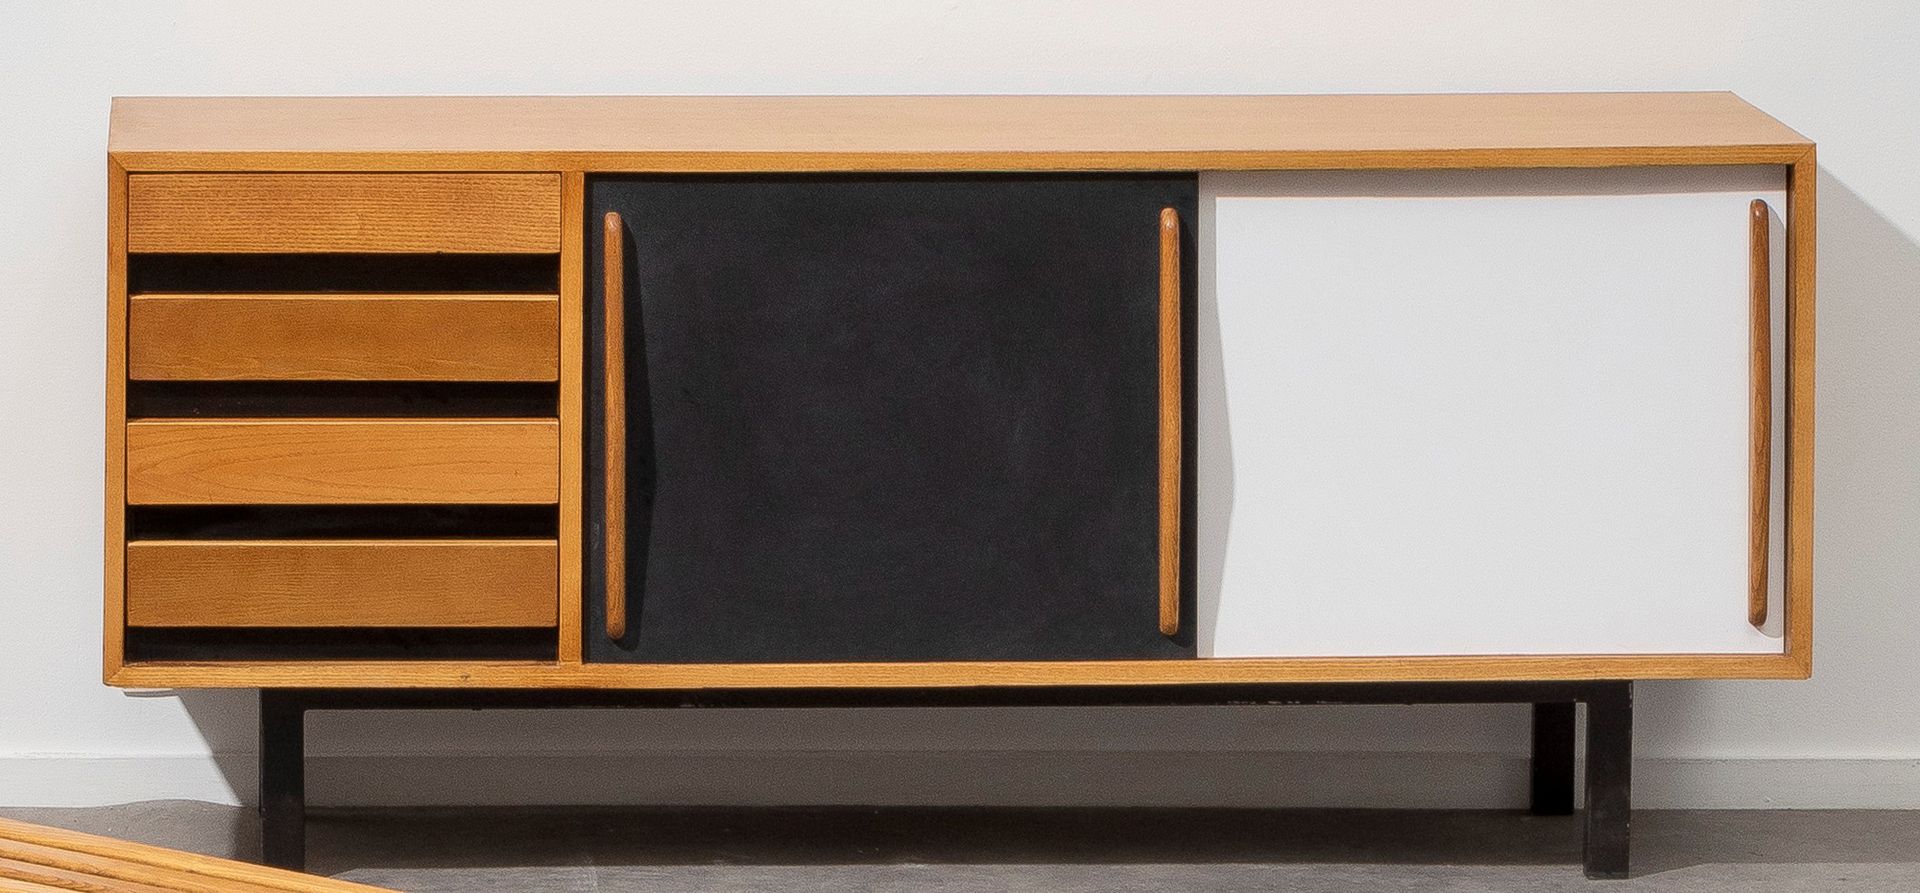 CHARLOTTE PERRIAND (1909-1999) Cansado
带抽屉的边柜
黑白相间的白蜡木饰面和黑色漆面金属。
自助餐是一个很好的选择，它有一&hellip;